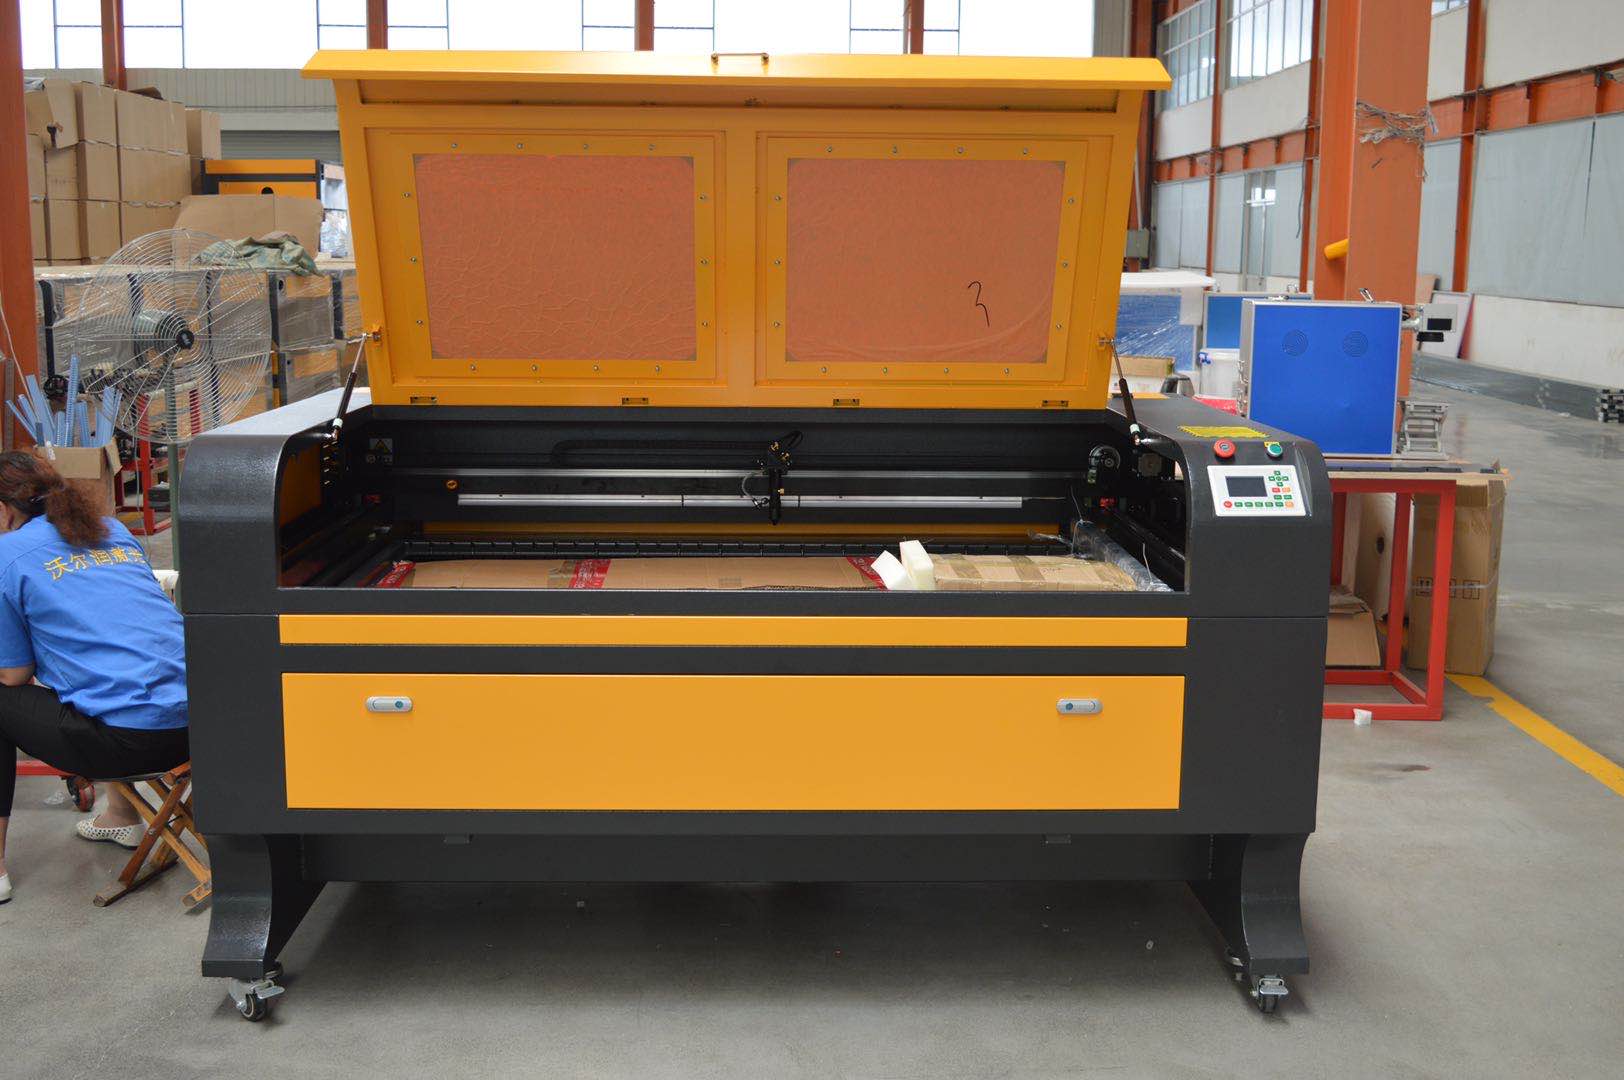 1610 laser cutting machine